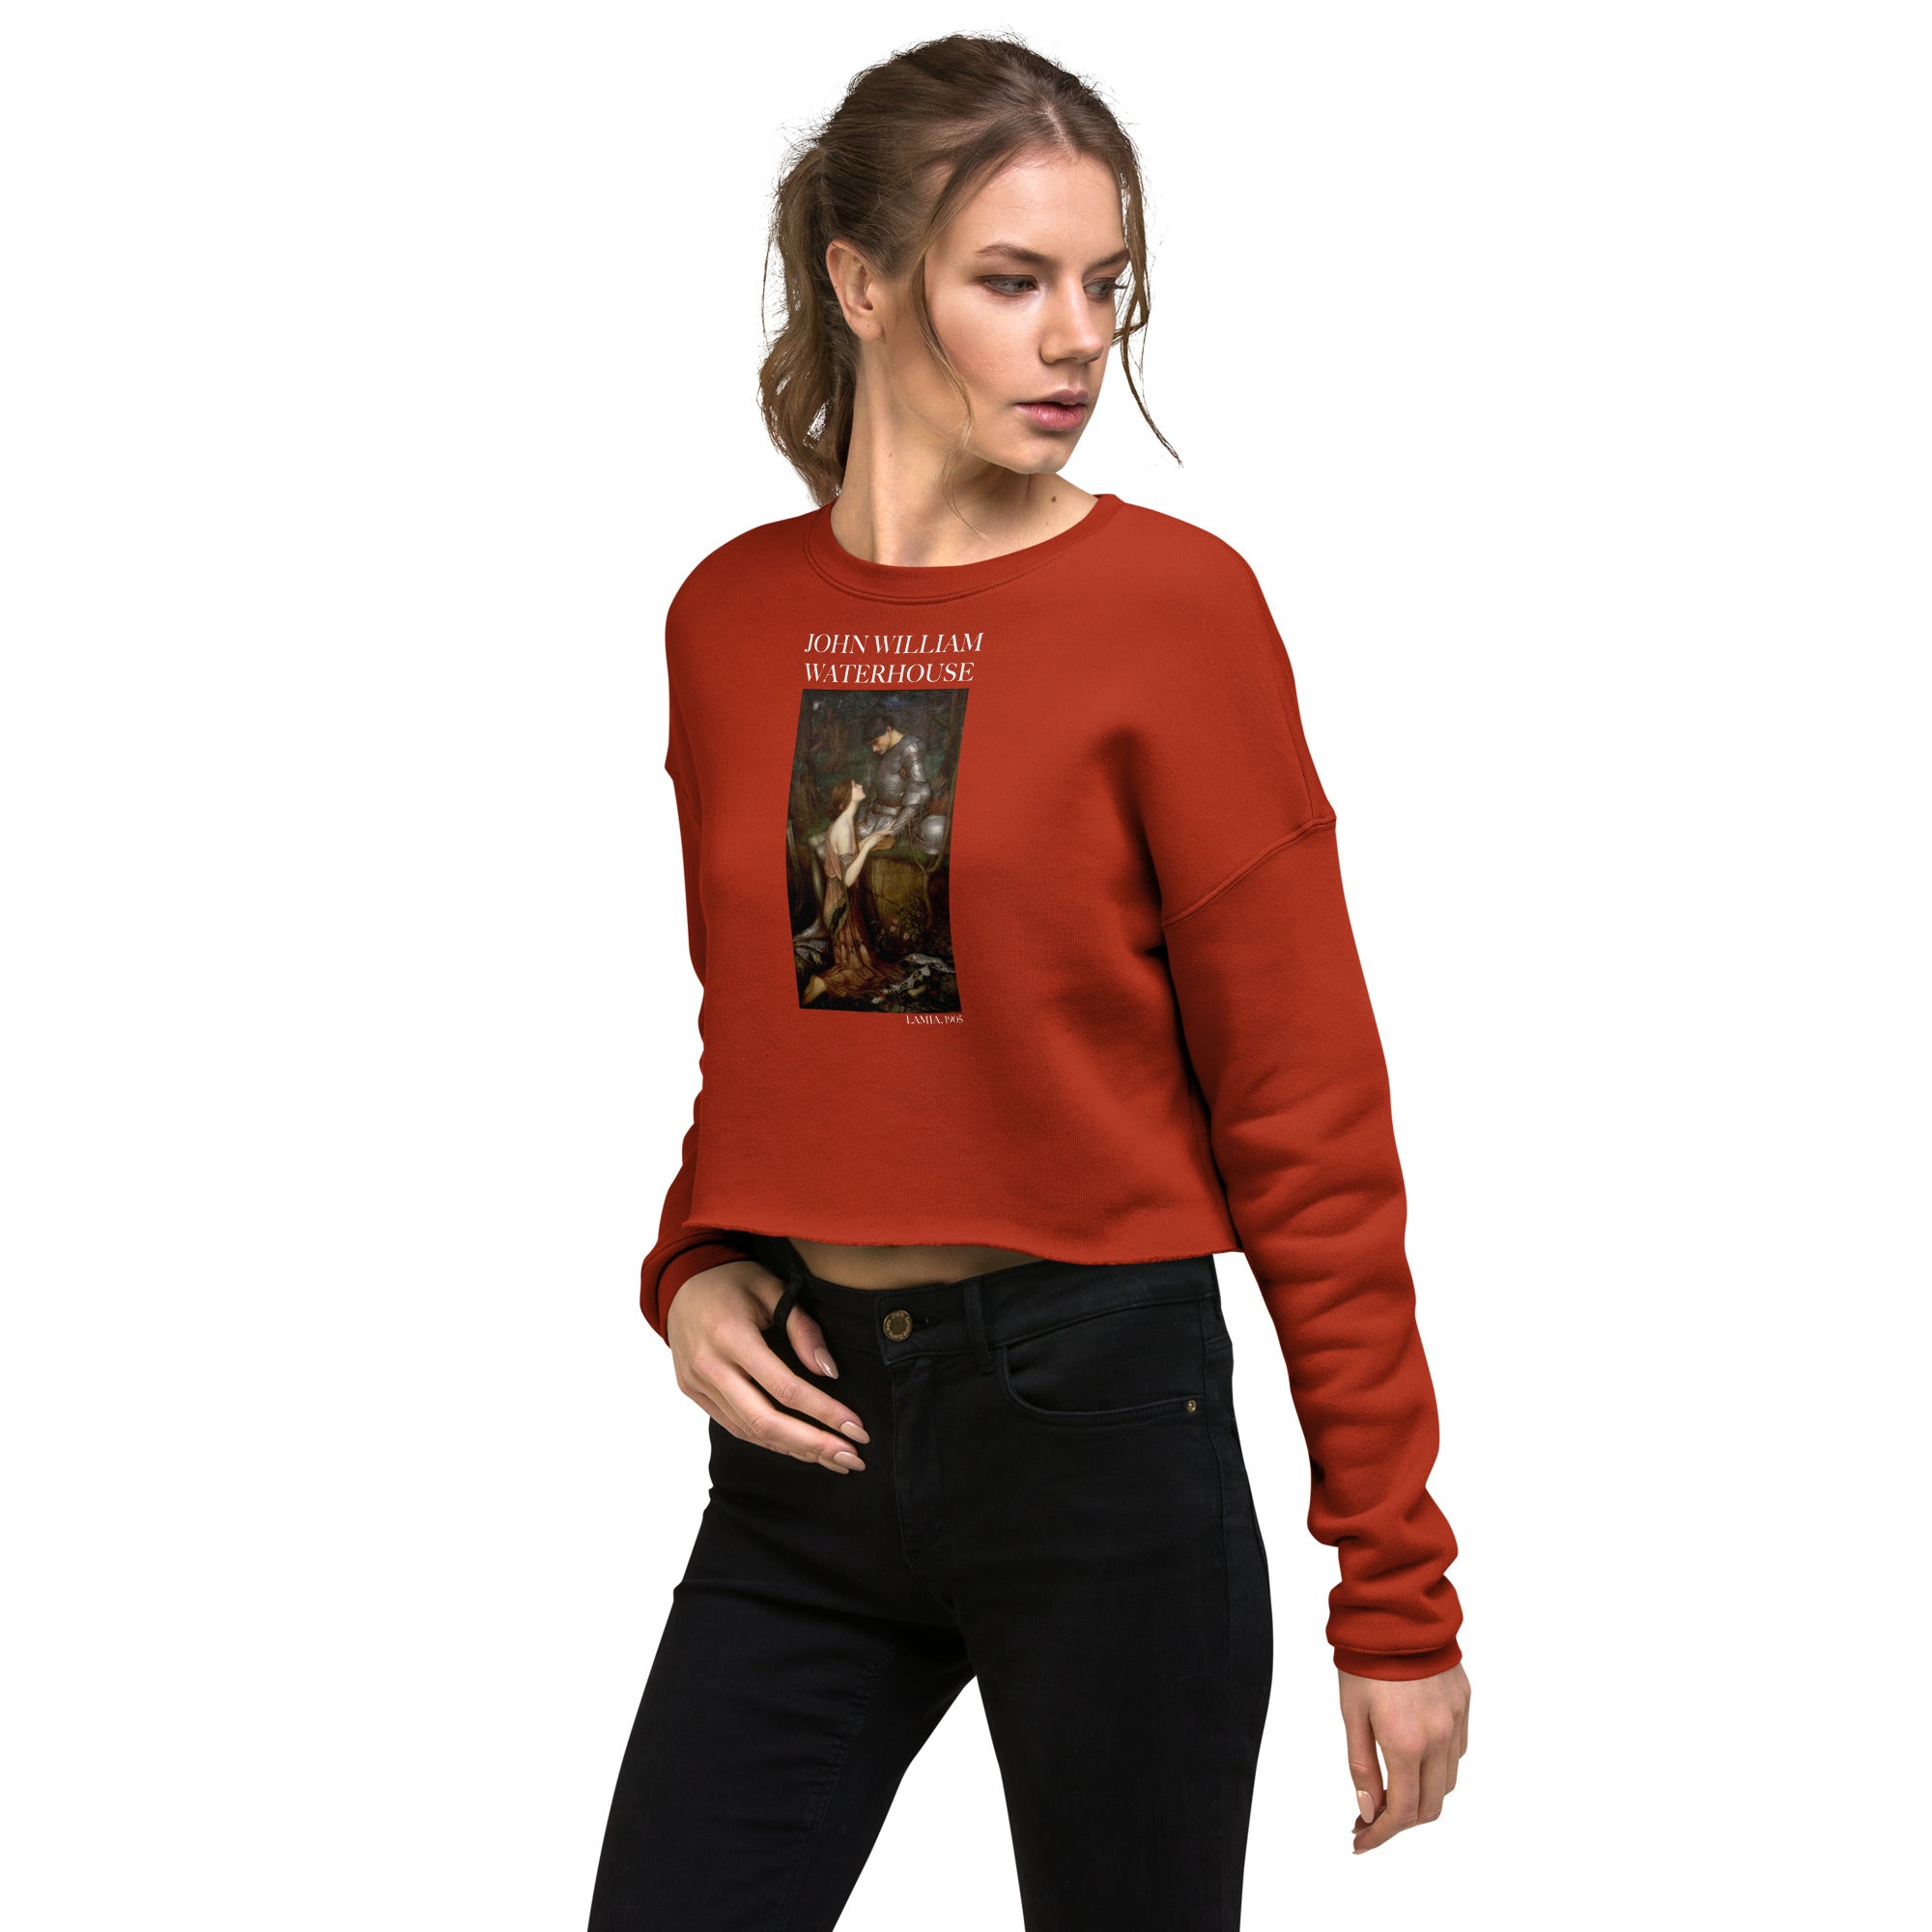 John William Waterhouse 'Lamia' Famous Painting Cropped Sweatshirt | Premium Art Cropped Sweatshirt